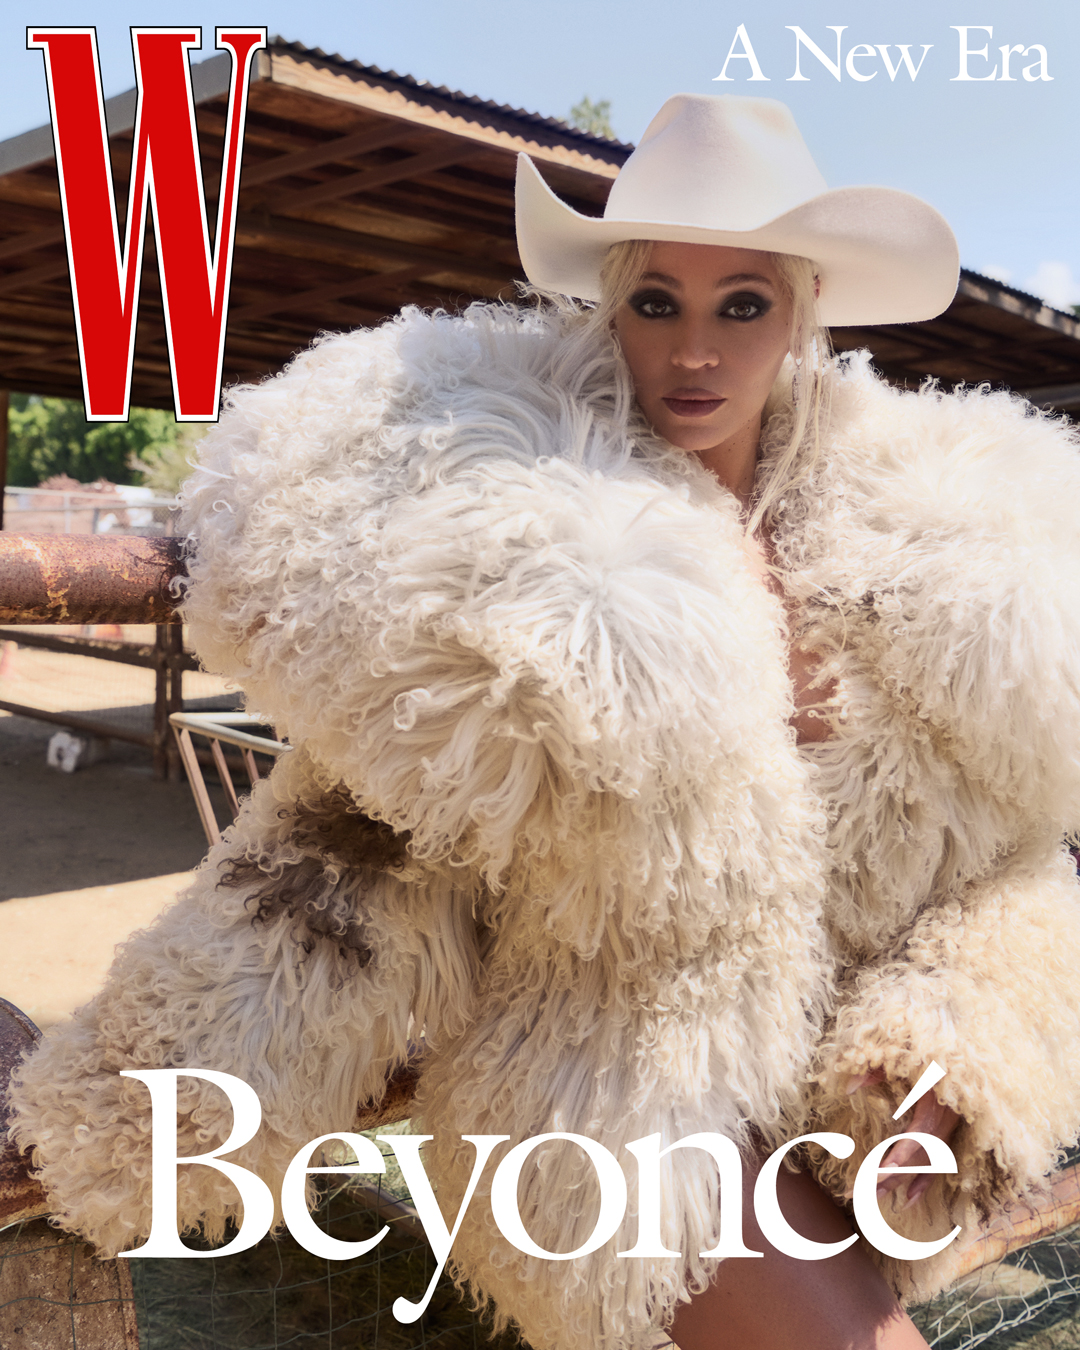 Beyonce Covers W Magazine